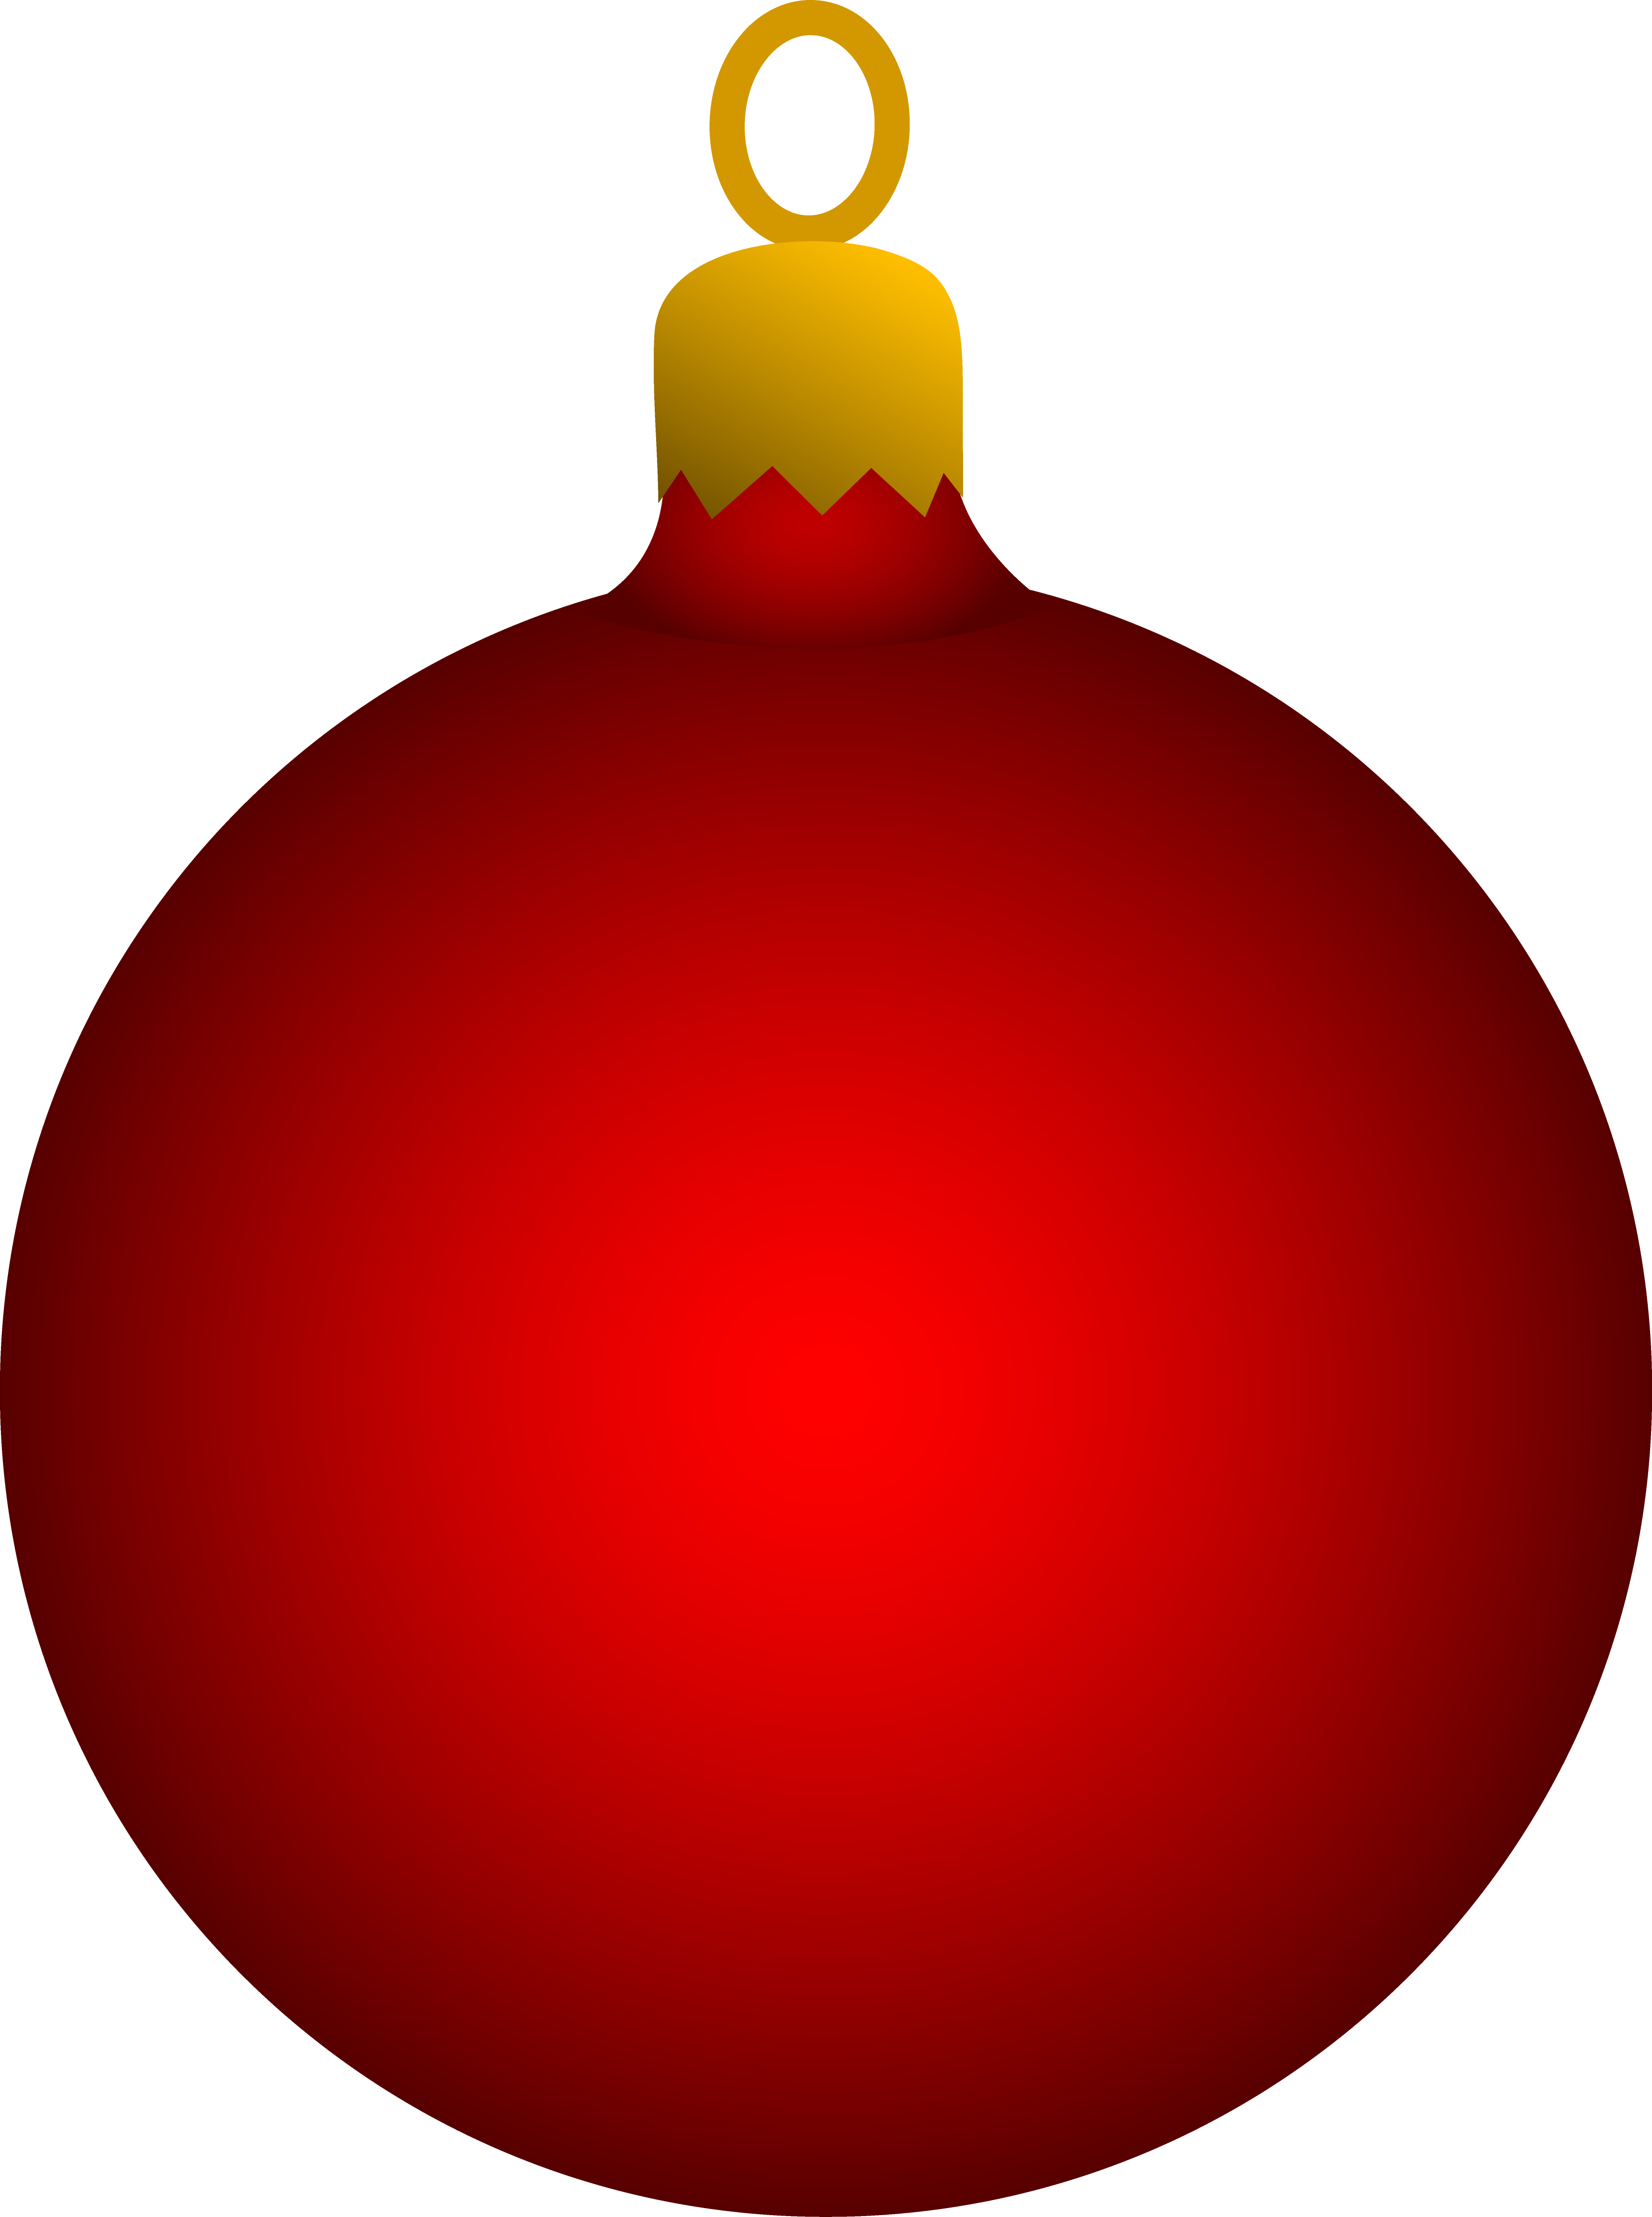 Images For > Christmas Ornament Outline Clip Art